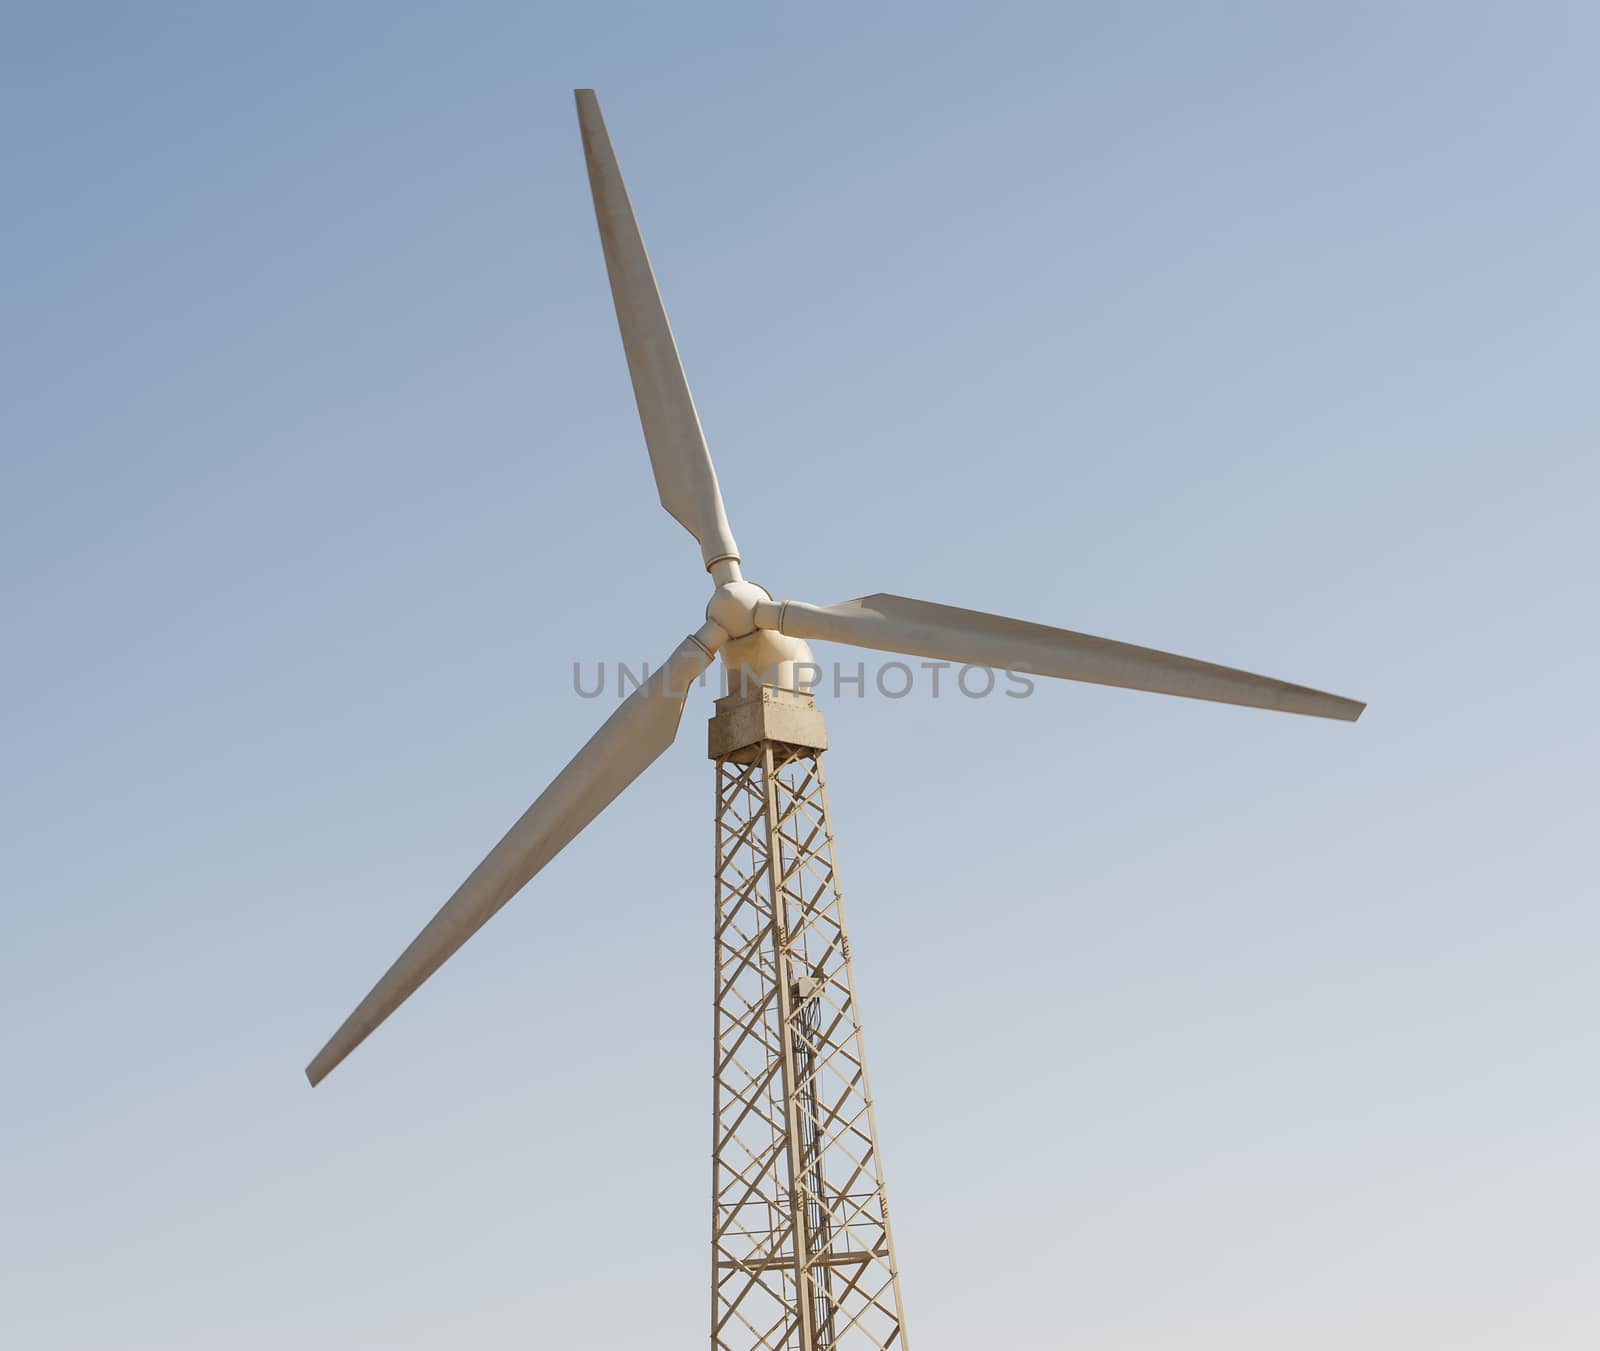 Electric wind turbine generator against a blue sky background